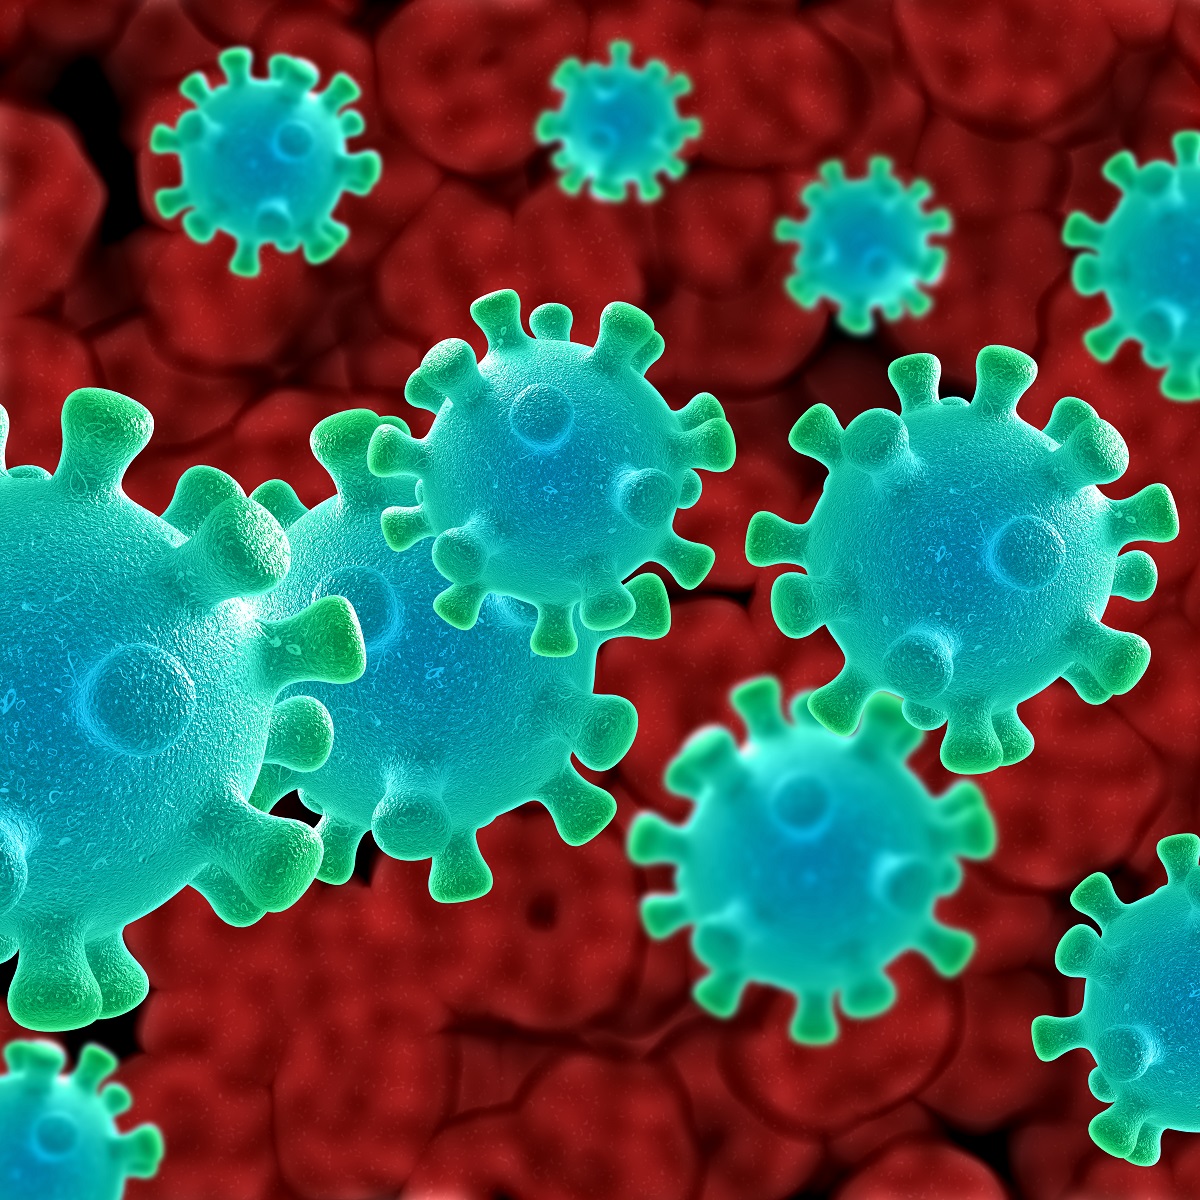 3D Rendering of Ovarian Cancer Virus Cells